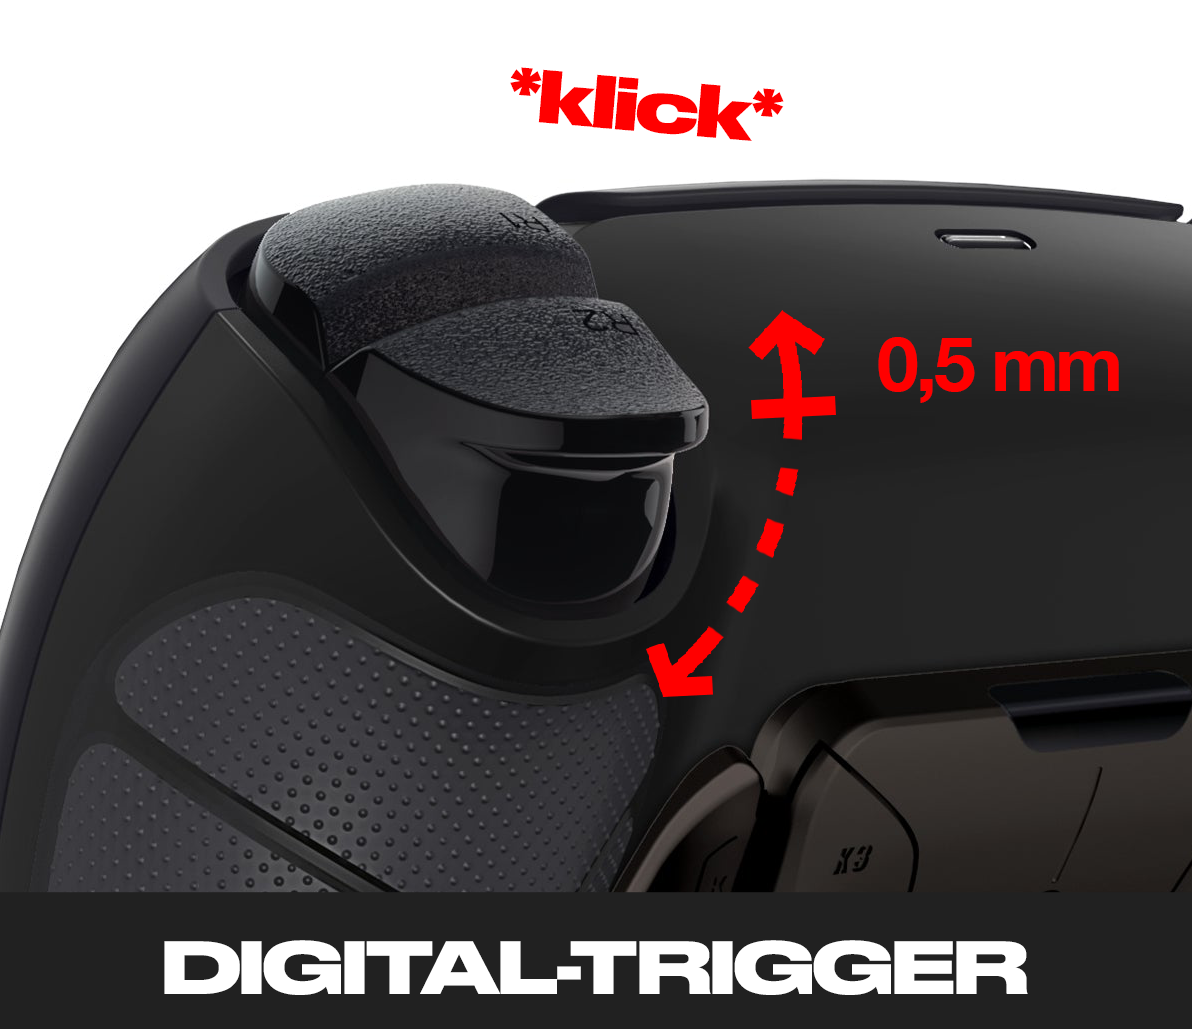 Controlador personalizado de PS5 'Caos Knight'